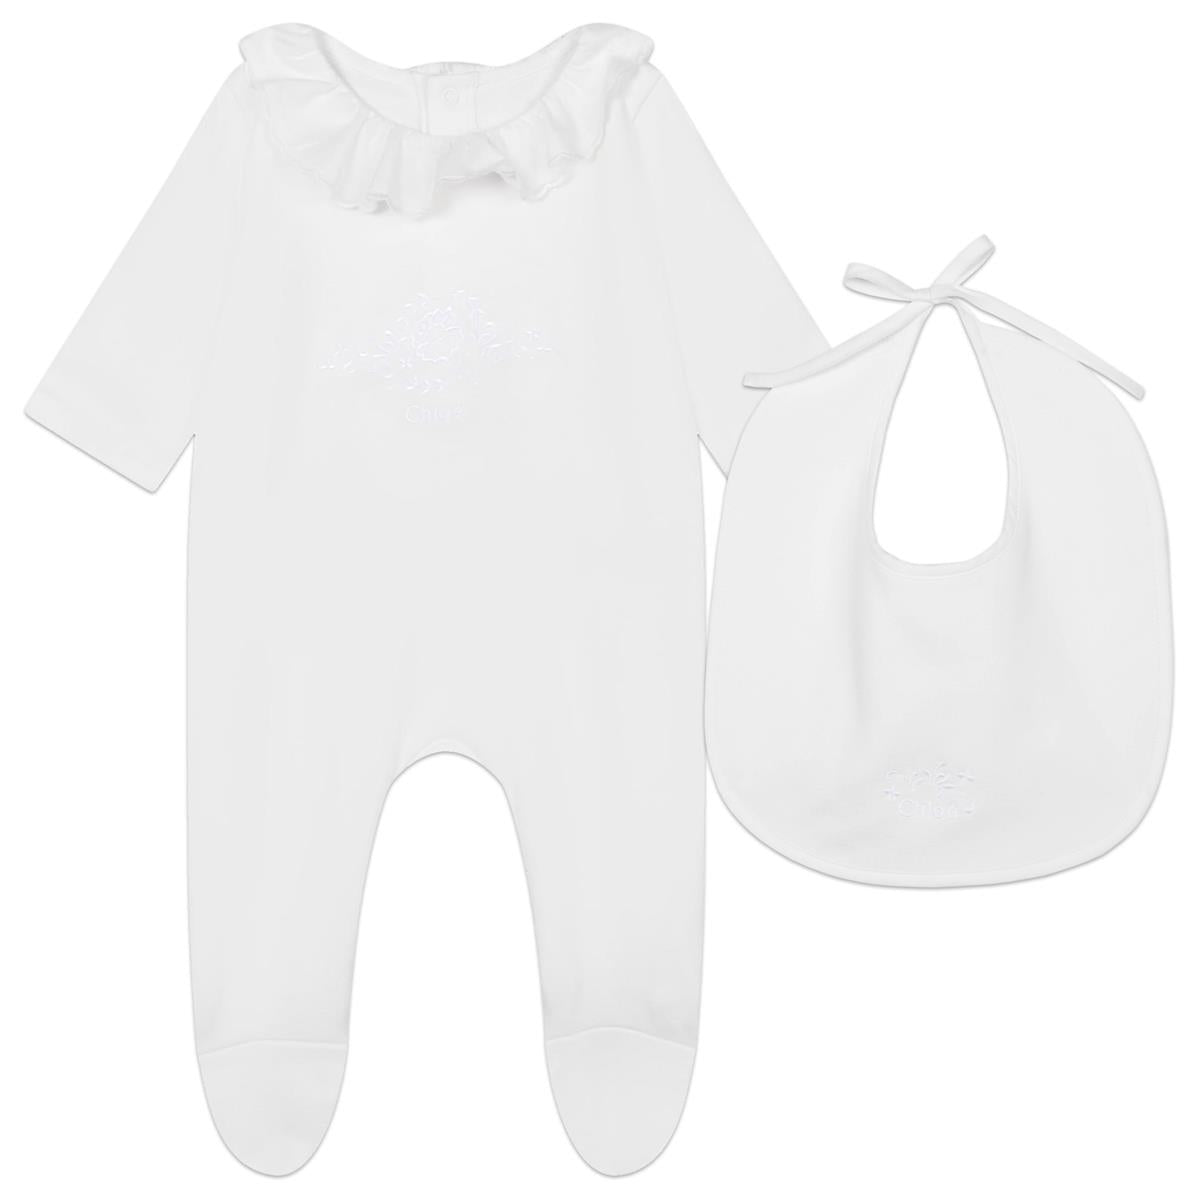 Baby Girls White Babysuit Set (2 Pack)